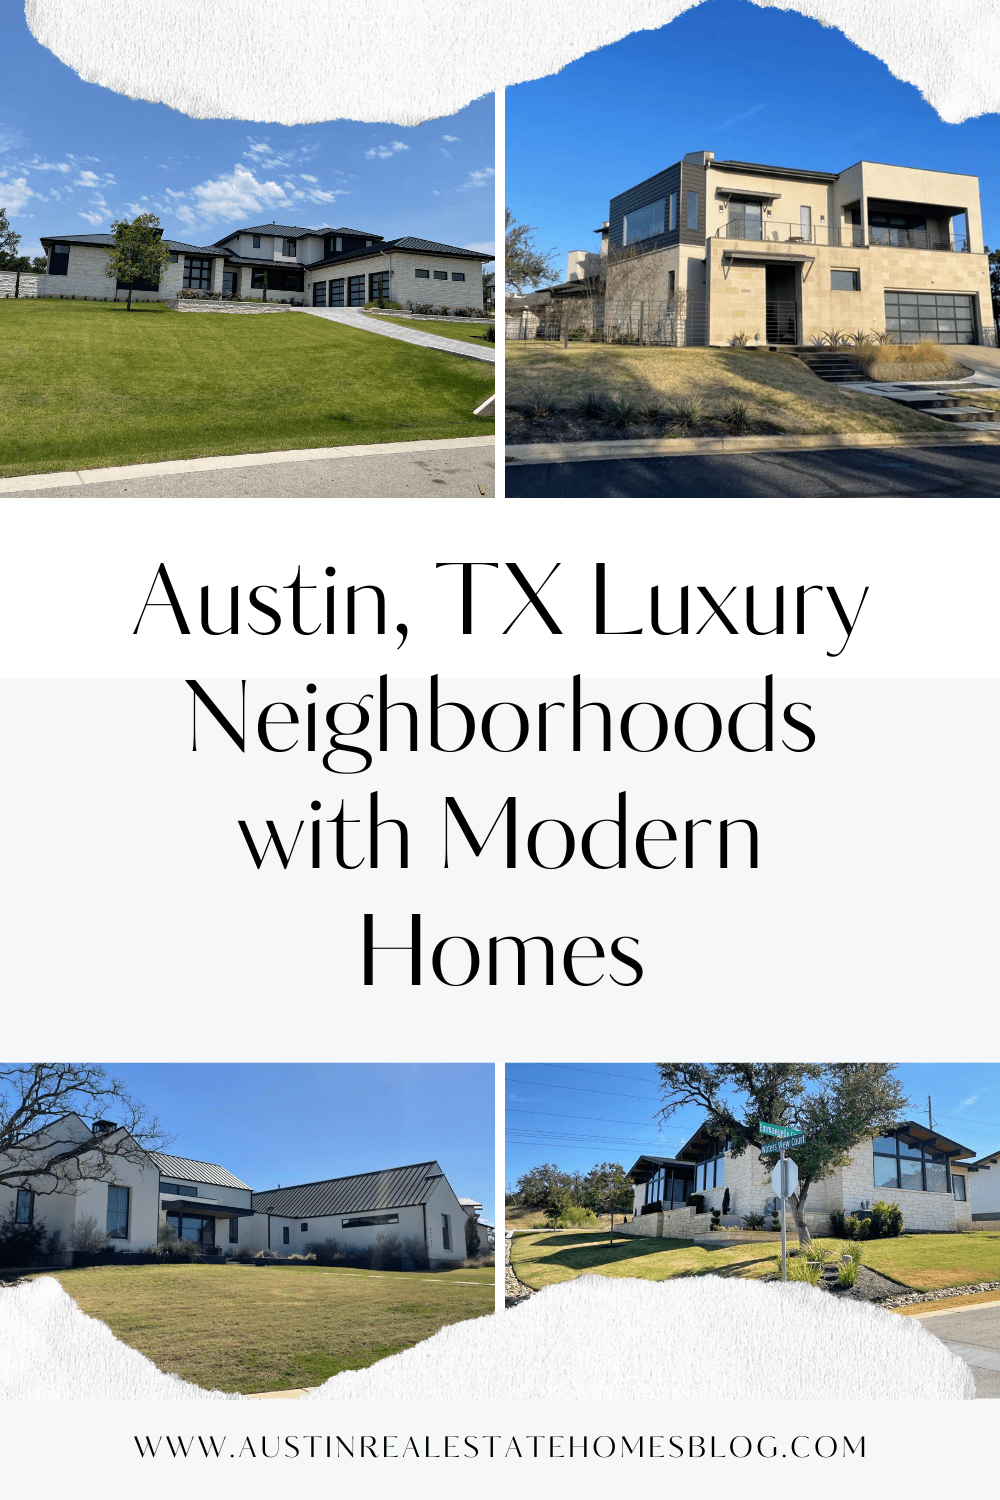 Austin, TX luxury neighborhoods with modern homes